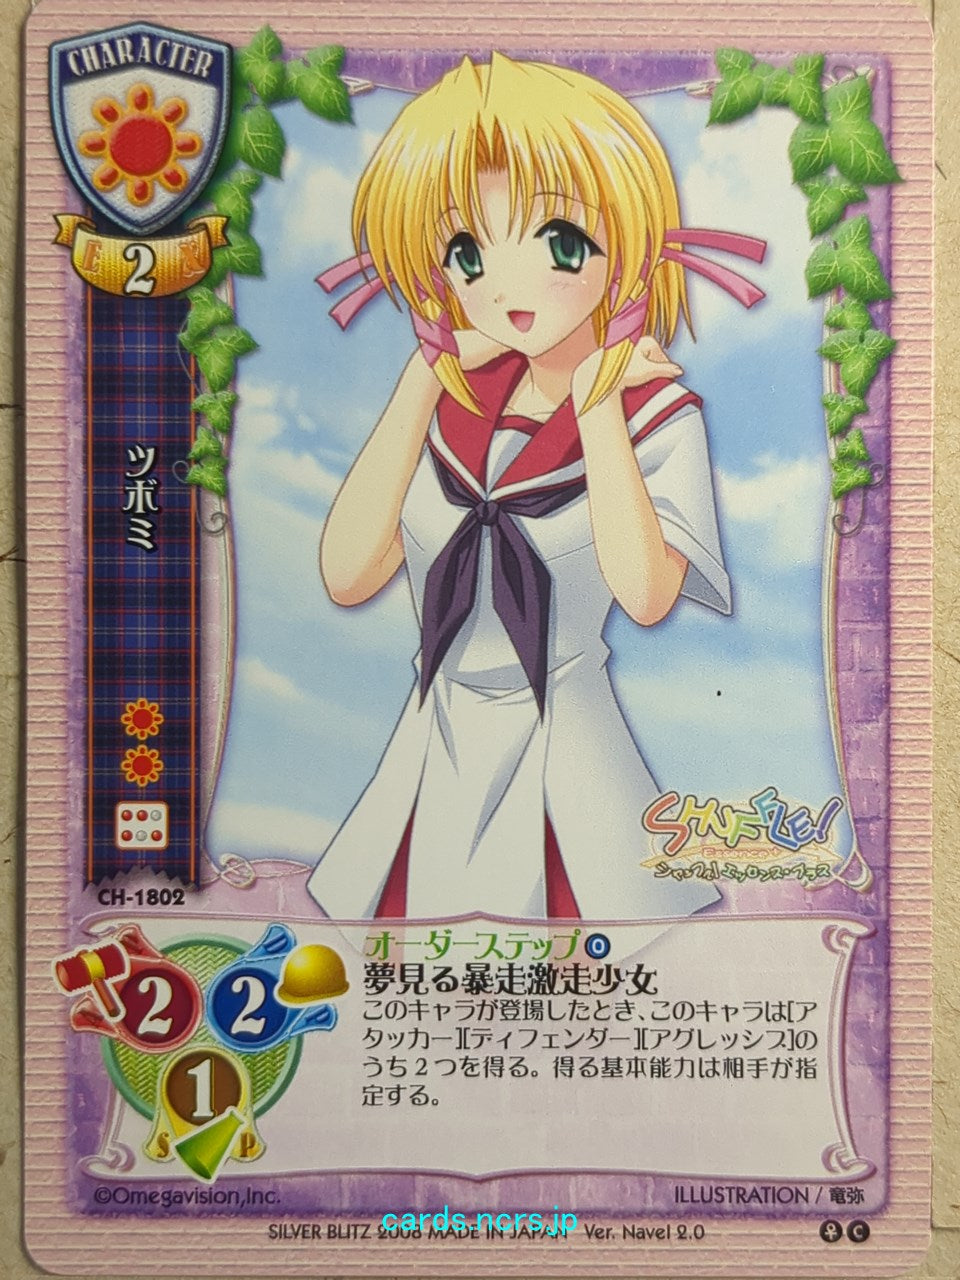 Lycee SHUFFLE! -Tsubomi-   Trading Card LY/CH-1802